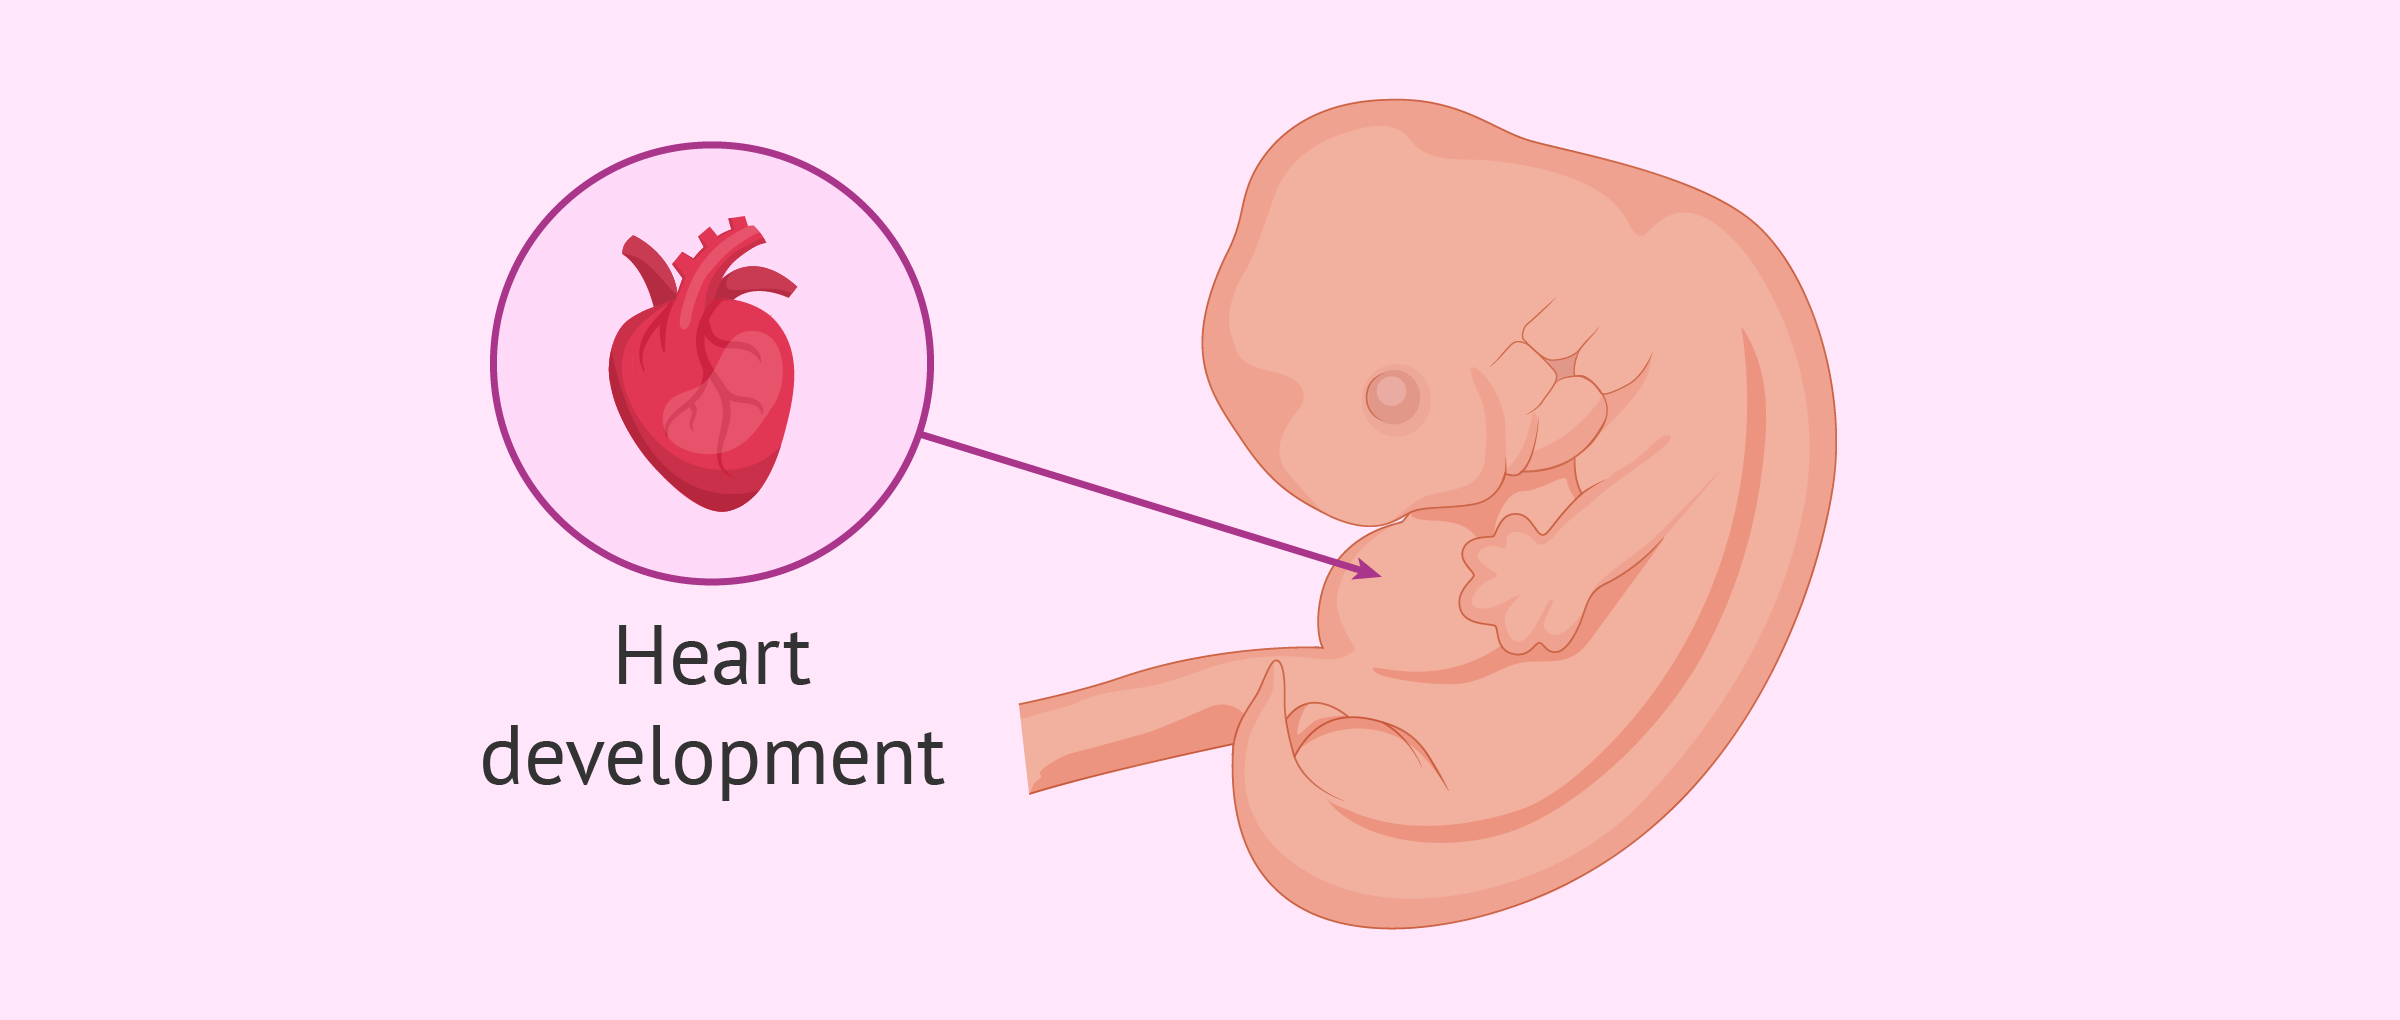 Embryo at 6th week of pregnancy